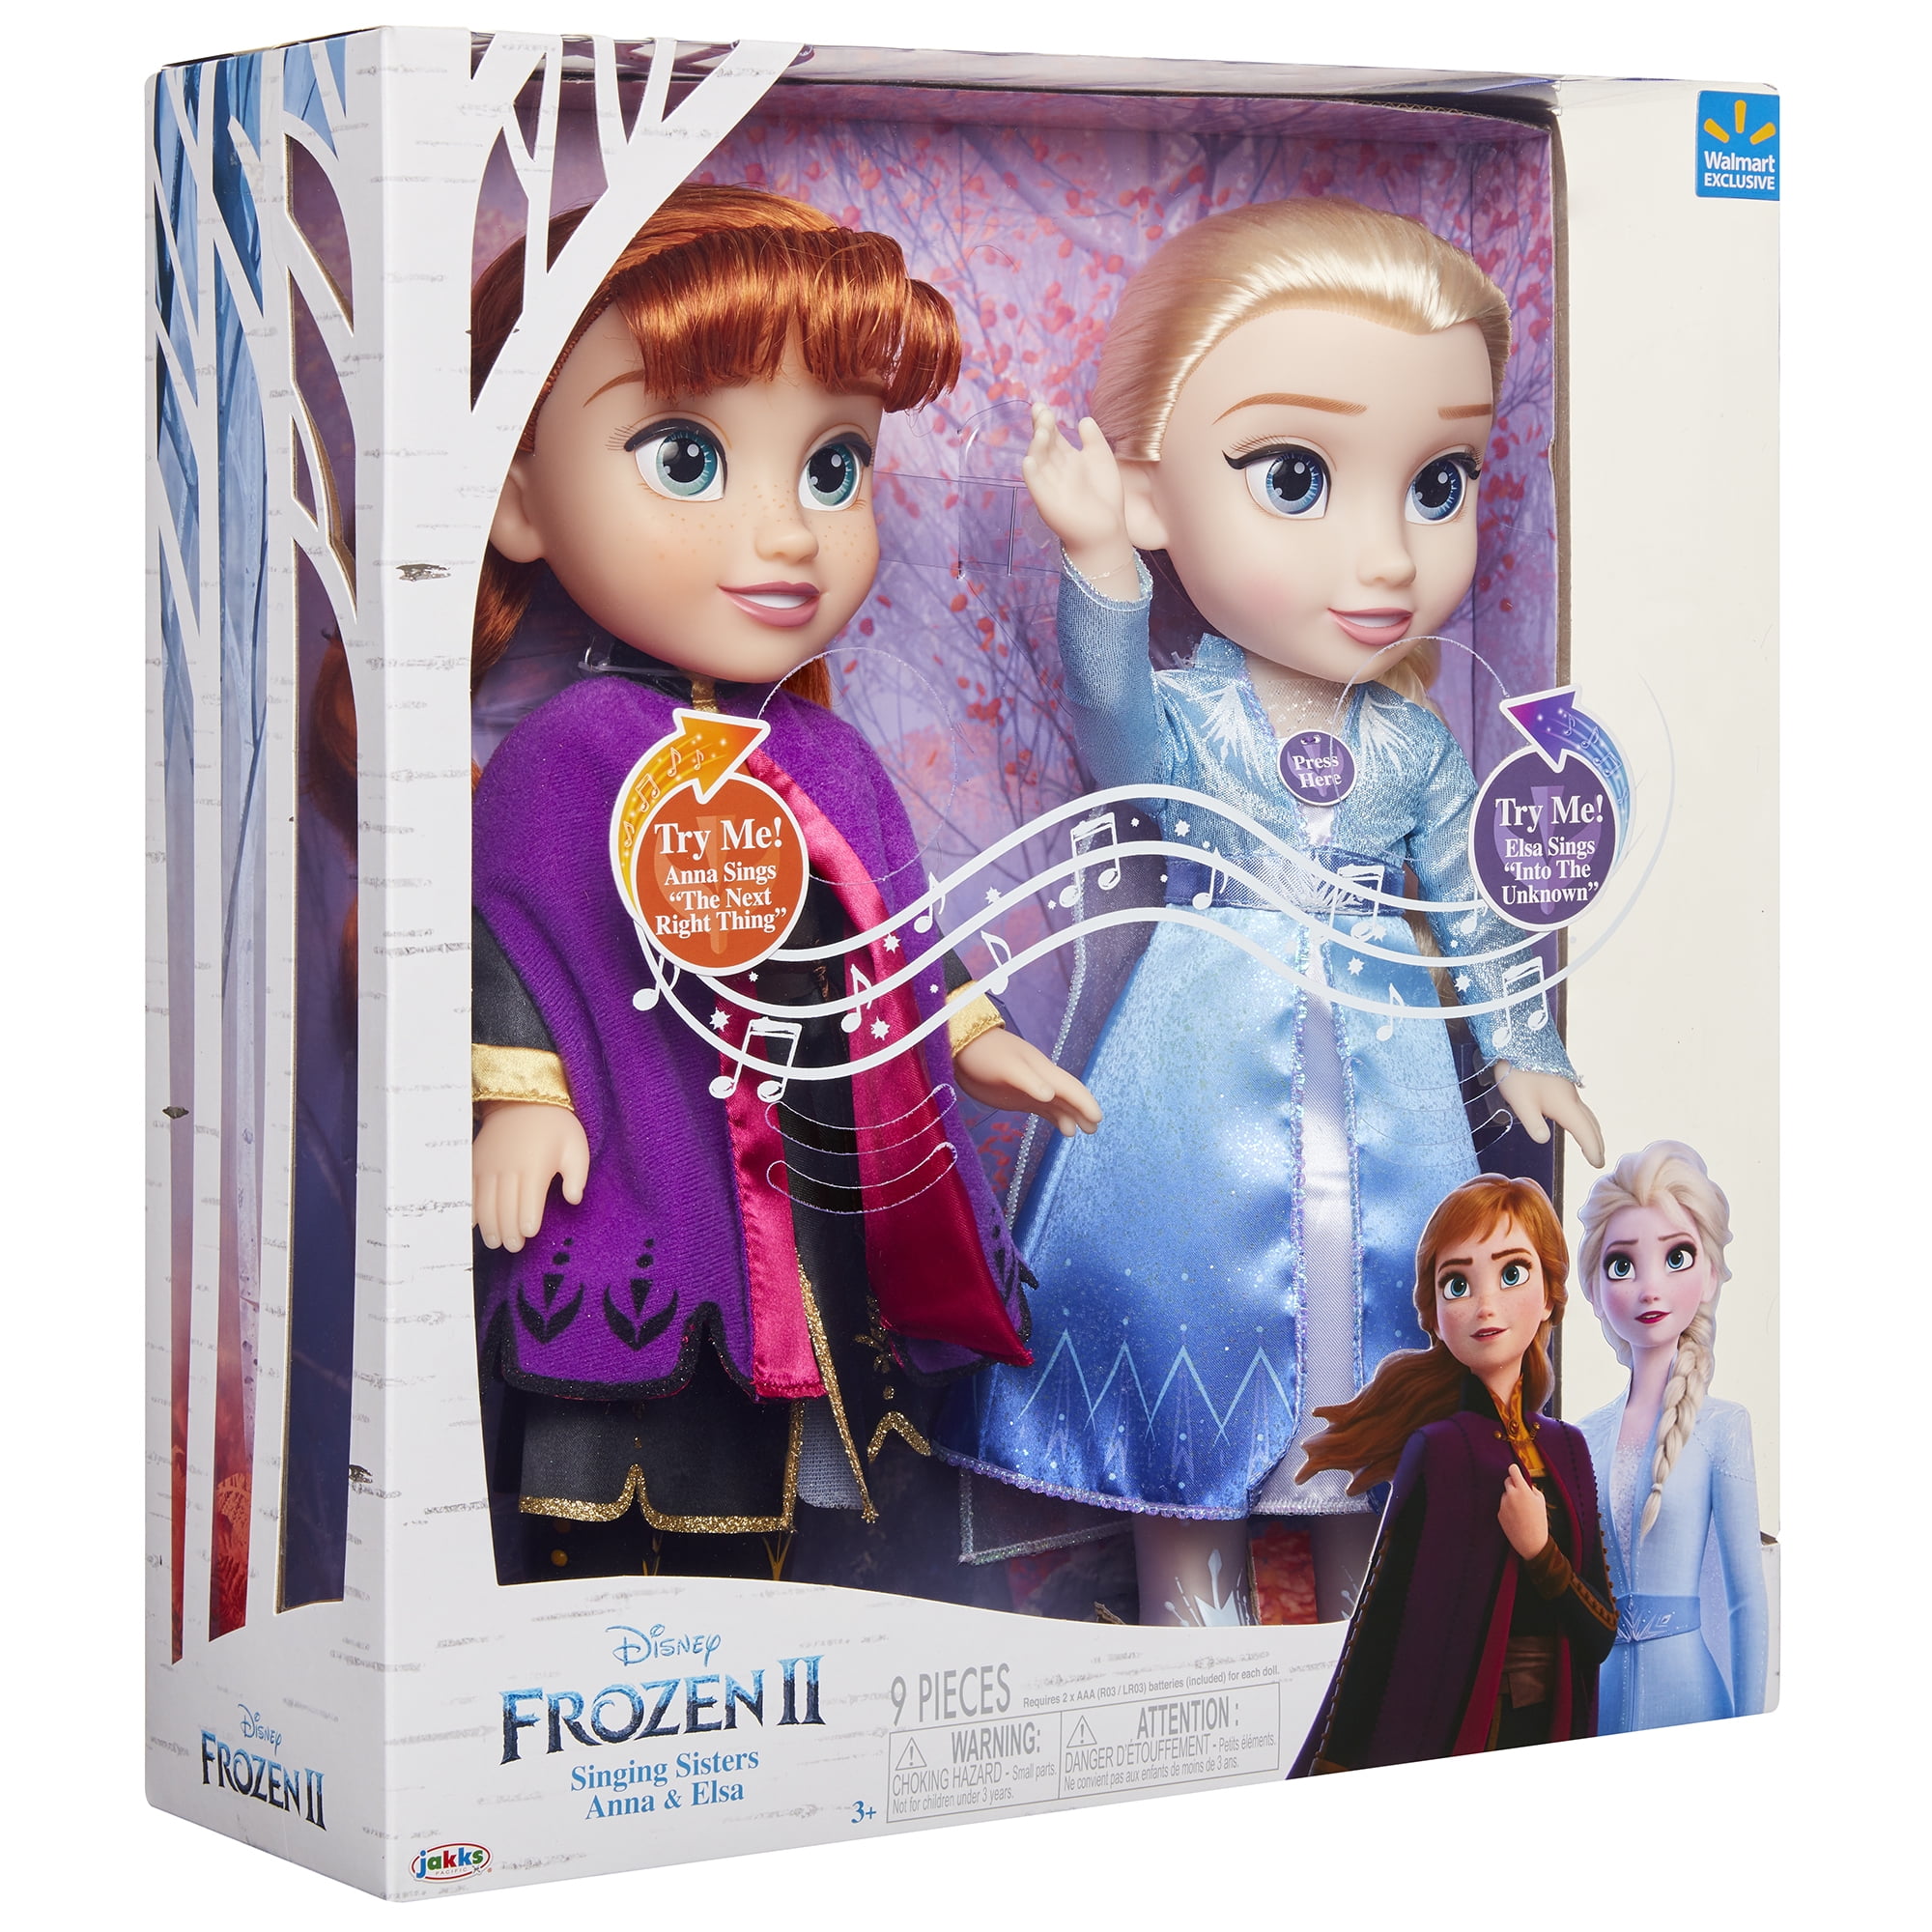 Best of Frozen 2 elsa and anna dolls